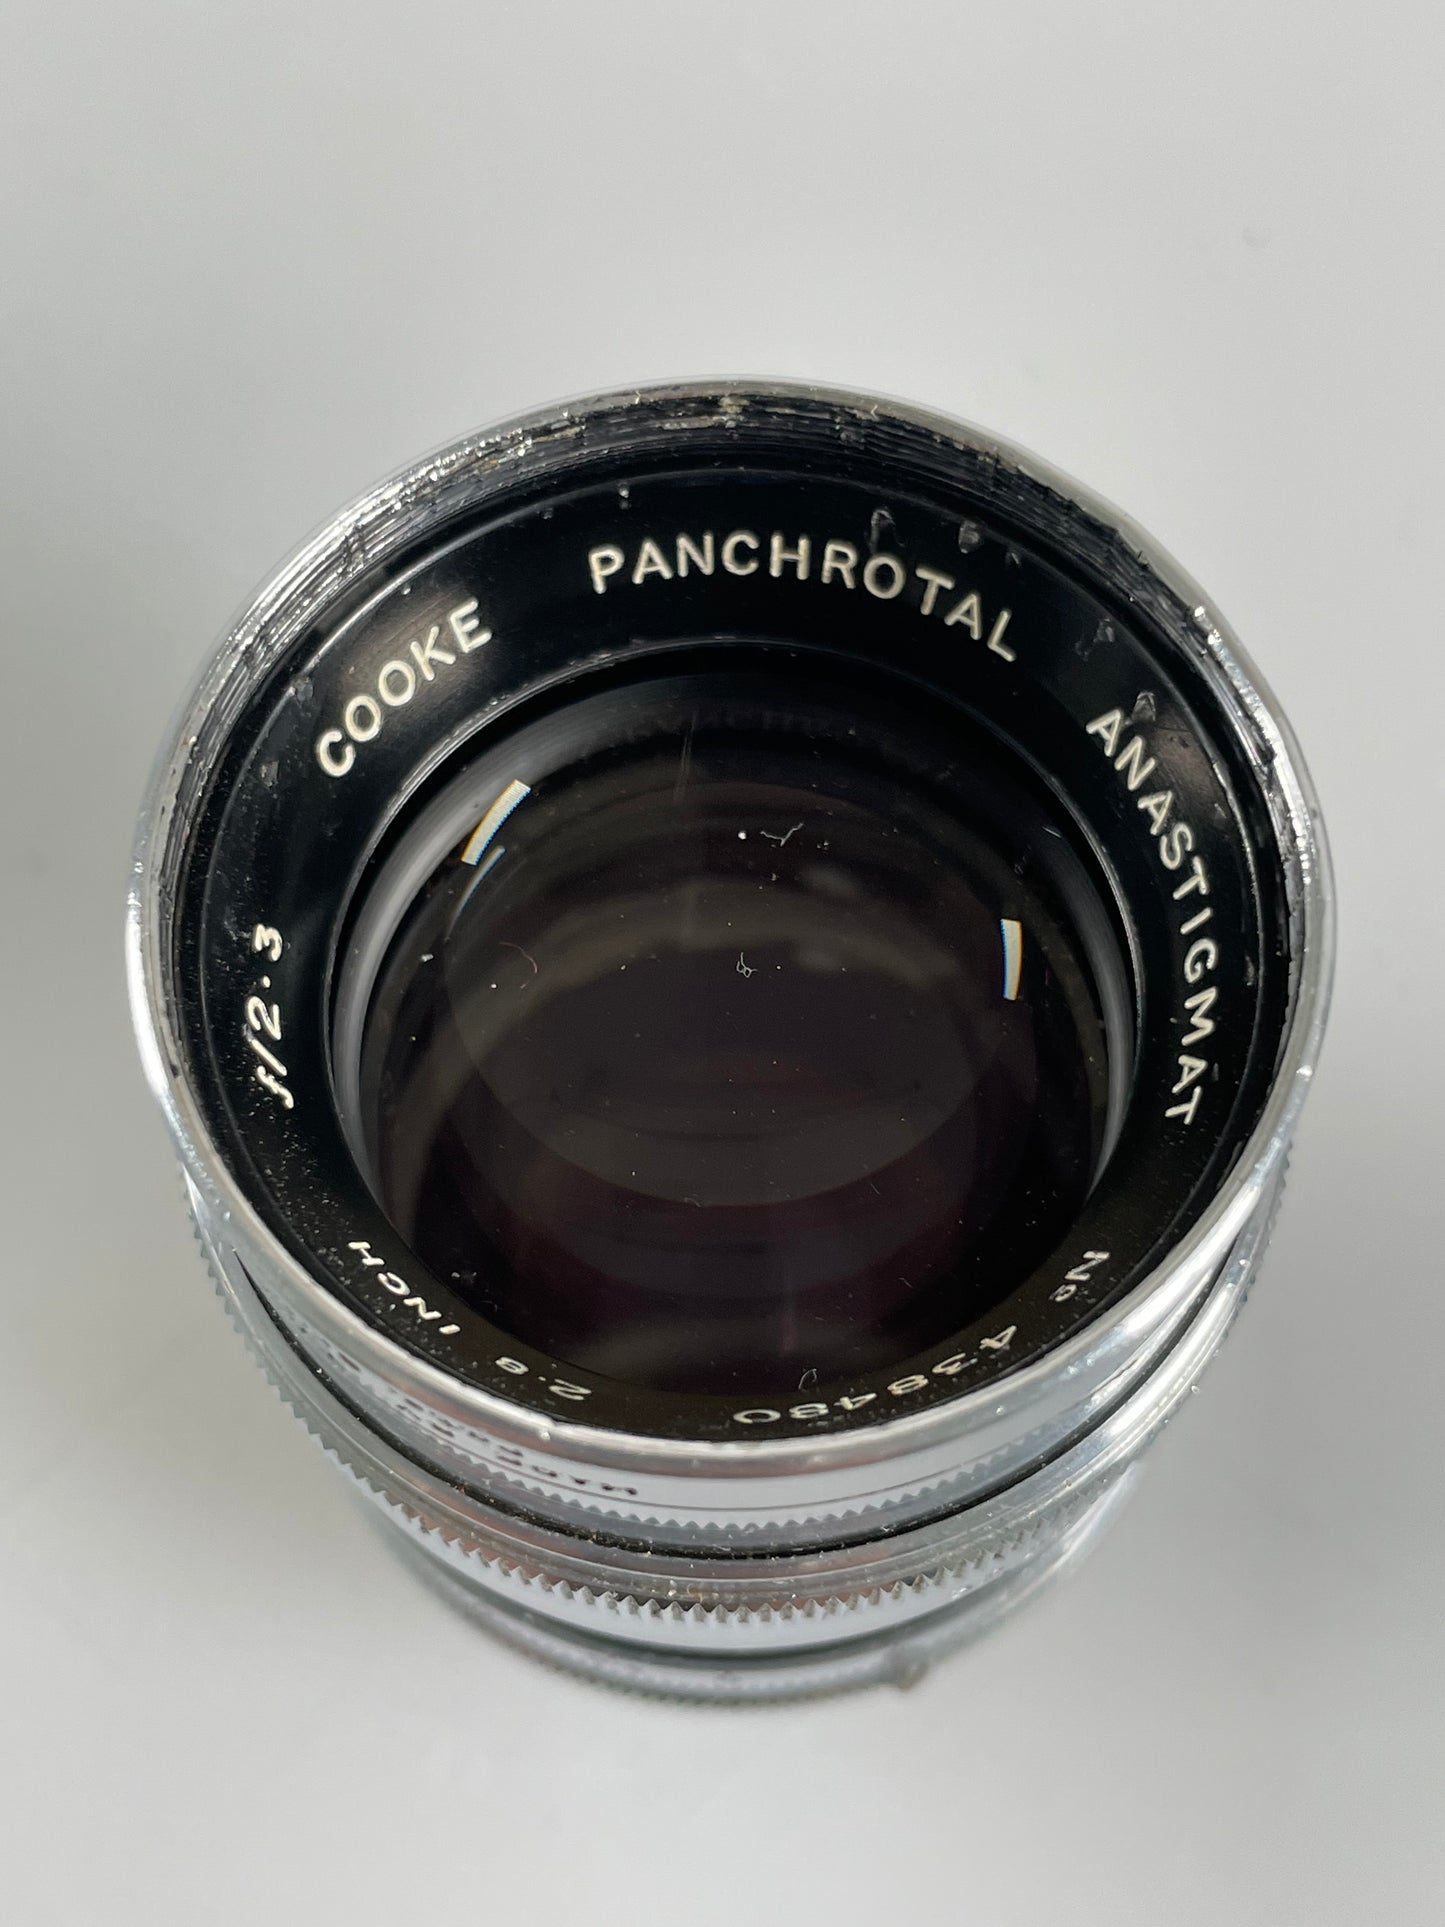 Cooke Panchrotal 2.8in f2.3 (T2.5) C mount cinema lens